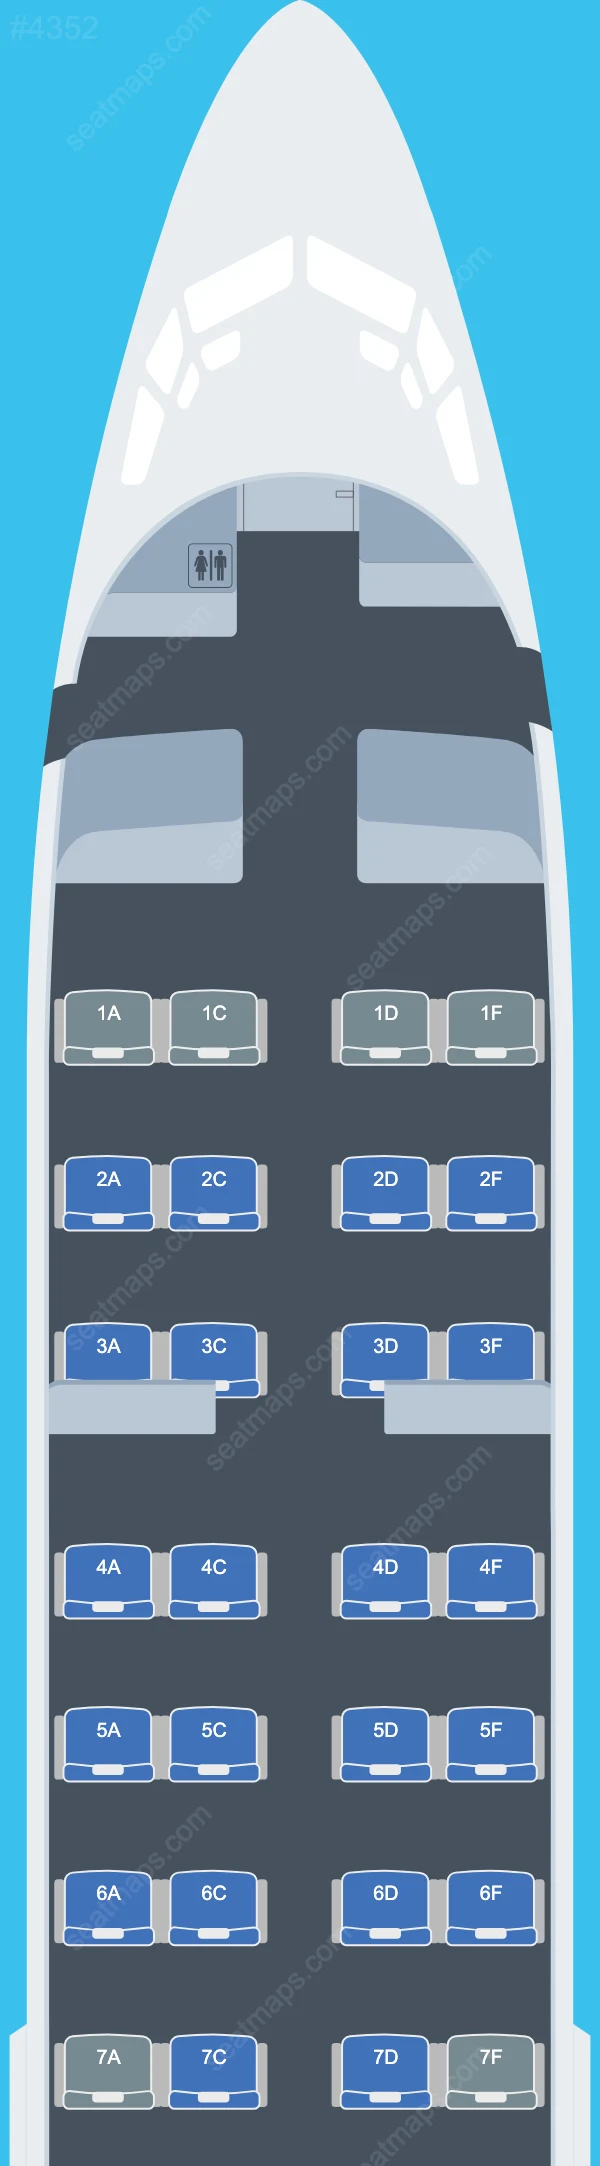 iAero Airways Boeing 737 Seat Maps 737-400 V.2